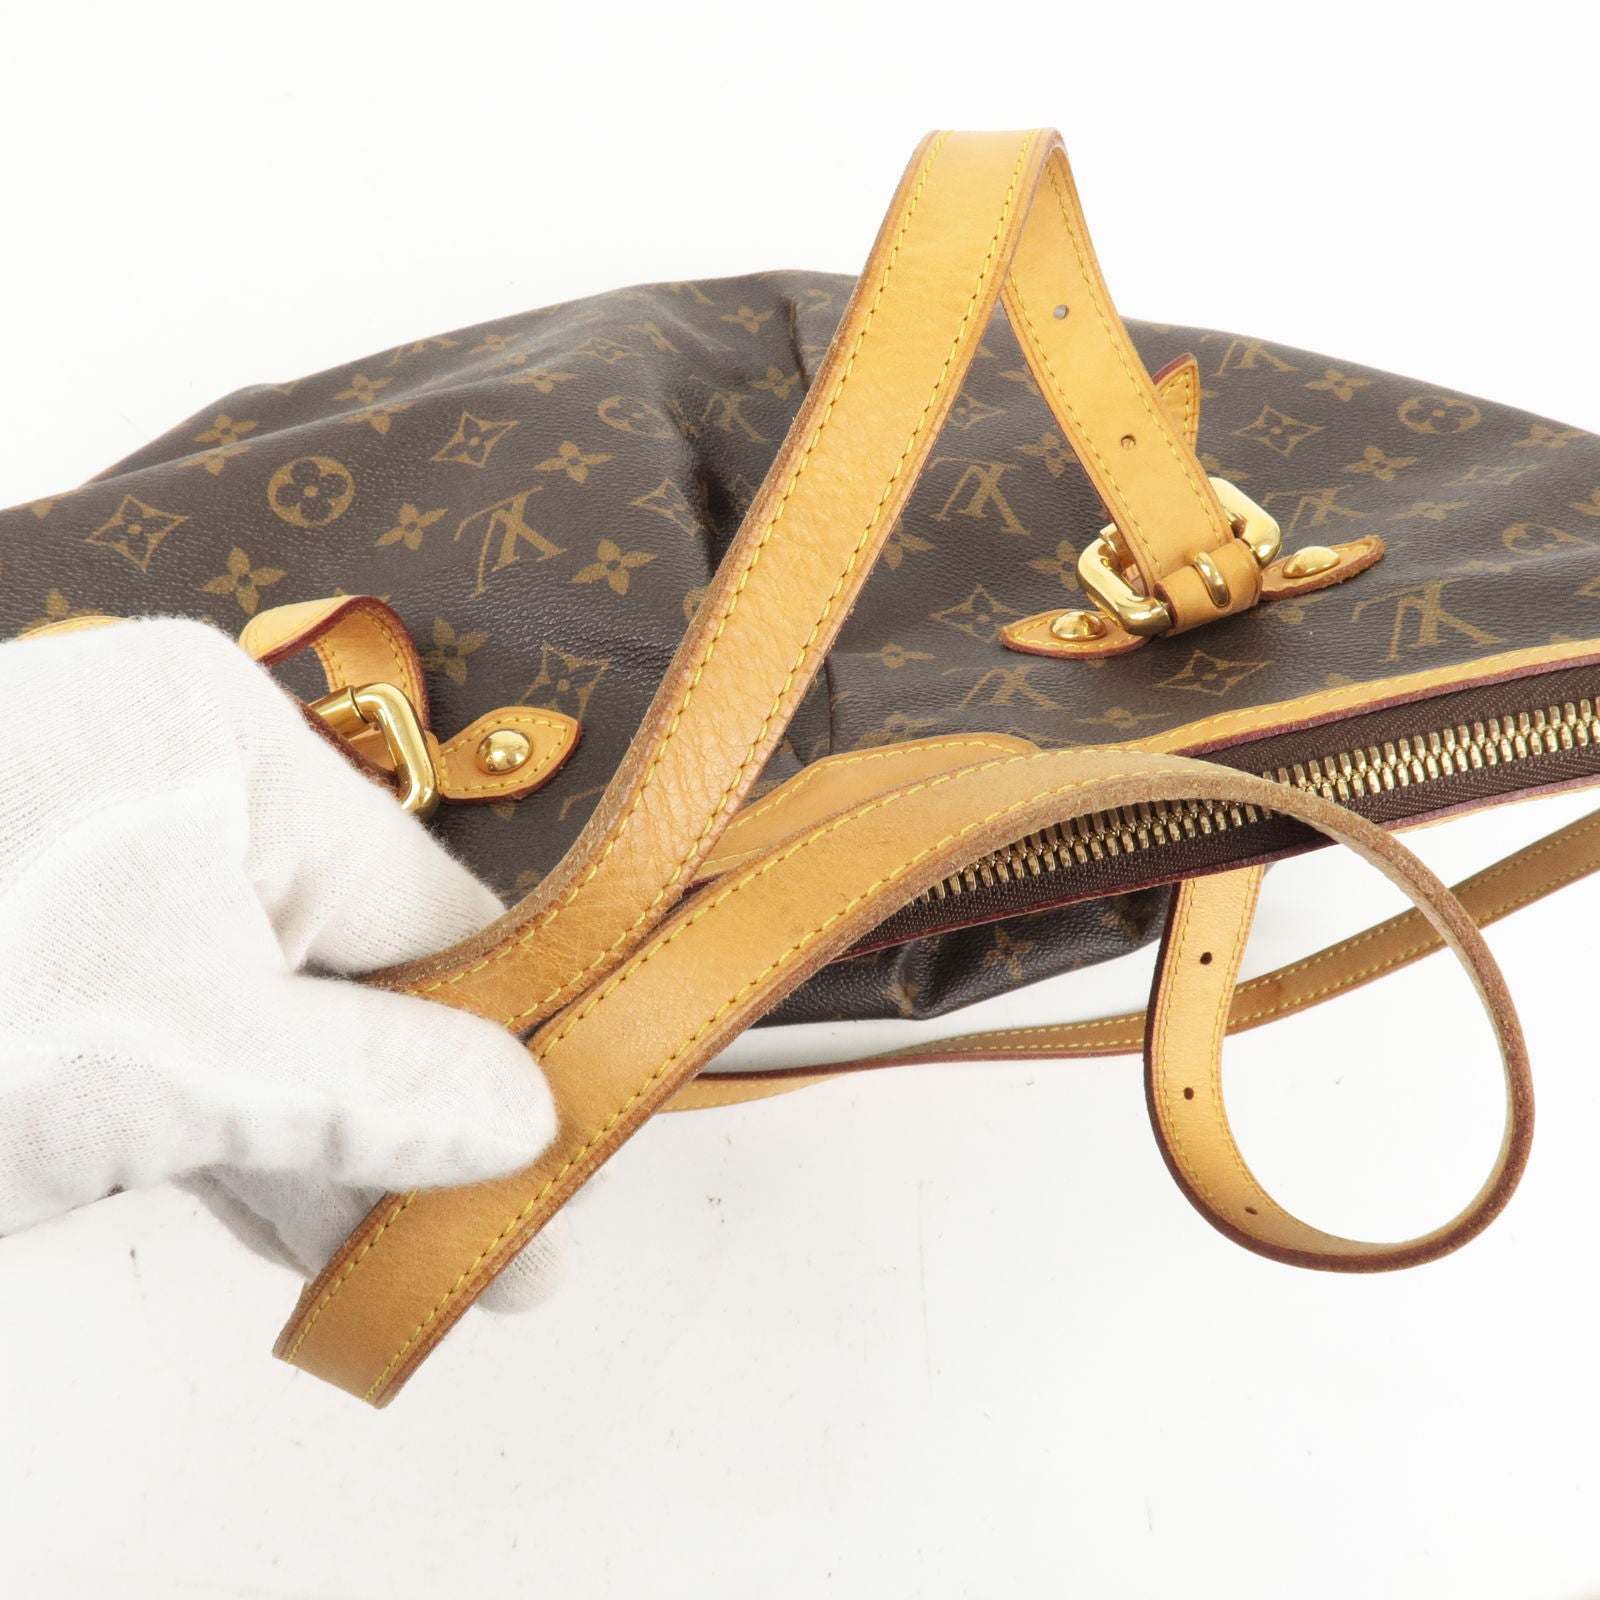 Louis Vuitton - Laguito Epi Leather Briefcase Noir